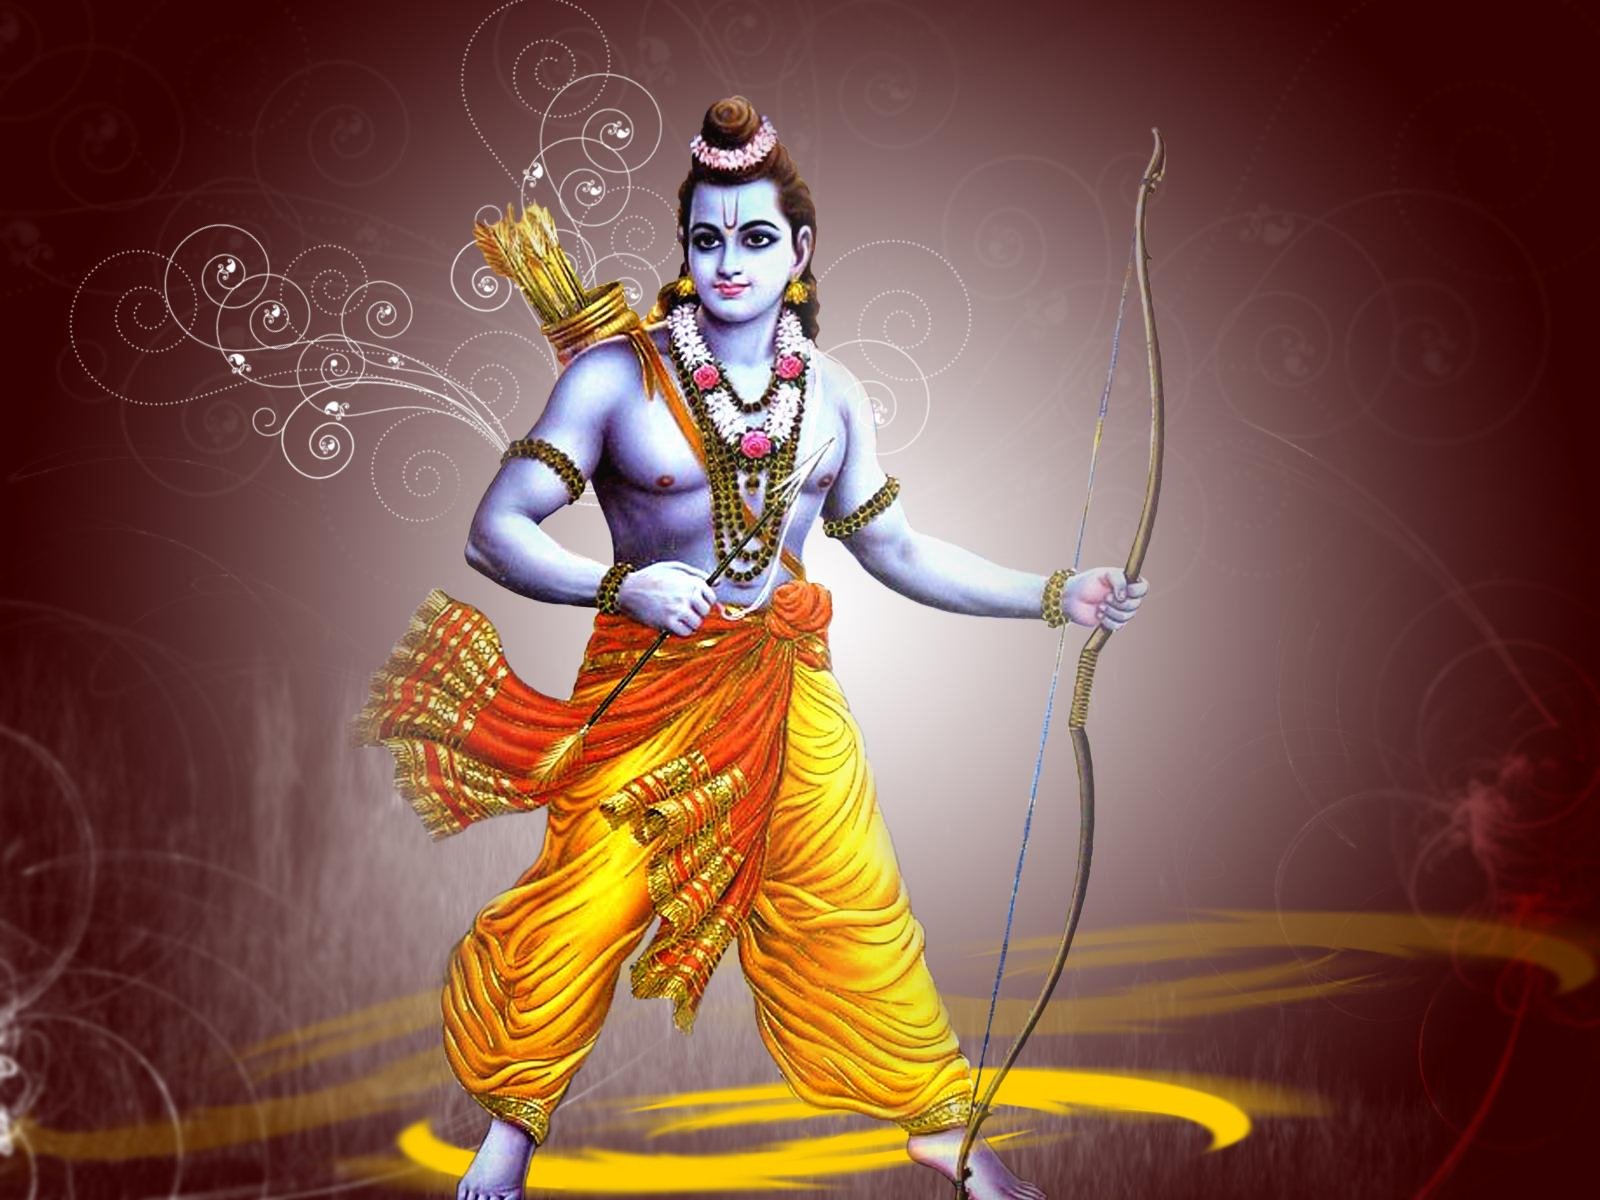 Shri Ram Varnan Shlok (From Ramayana)